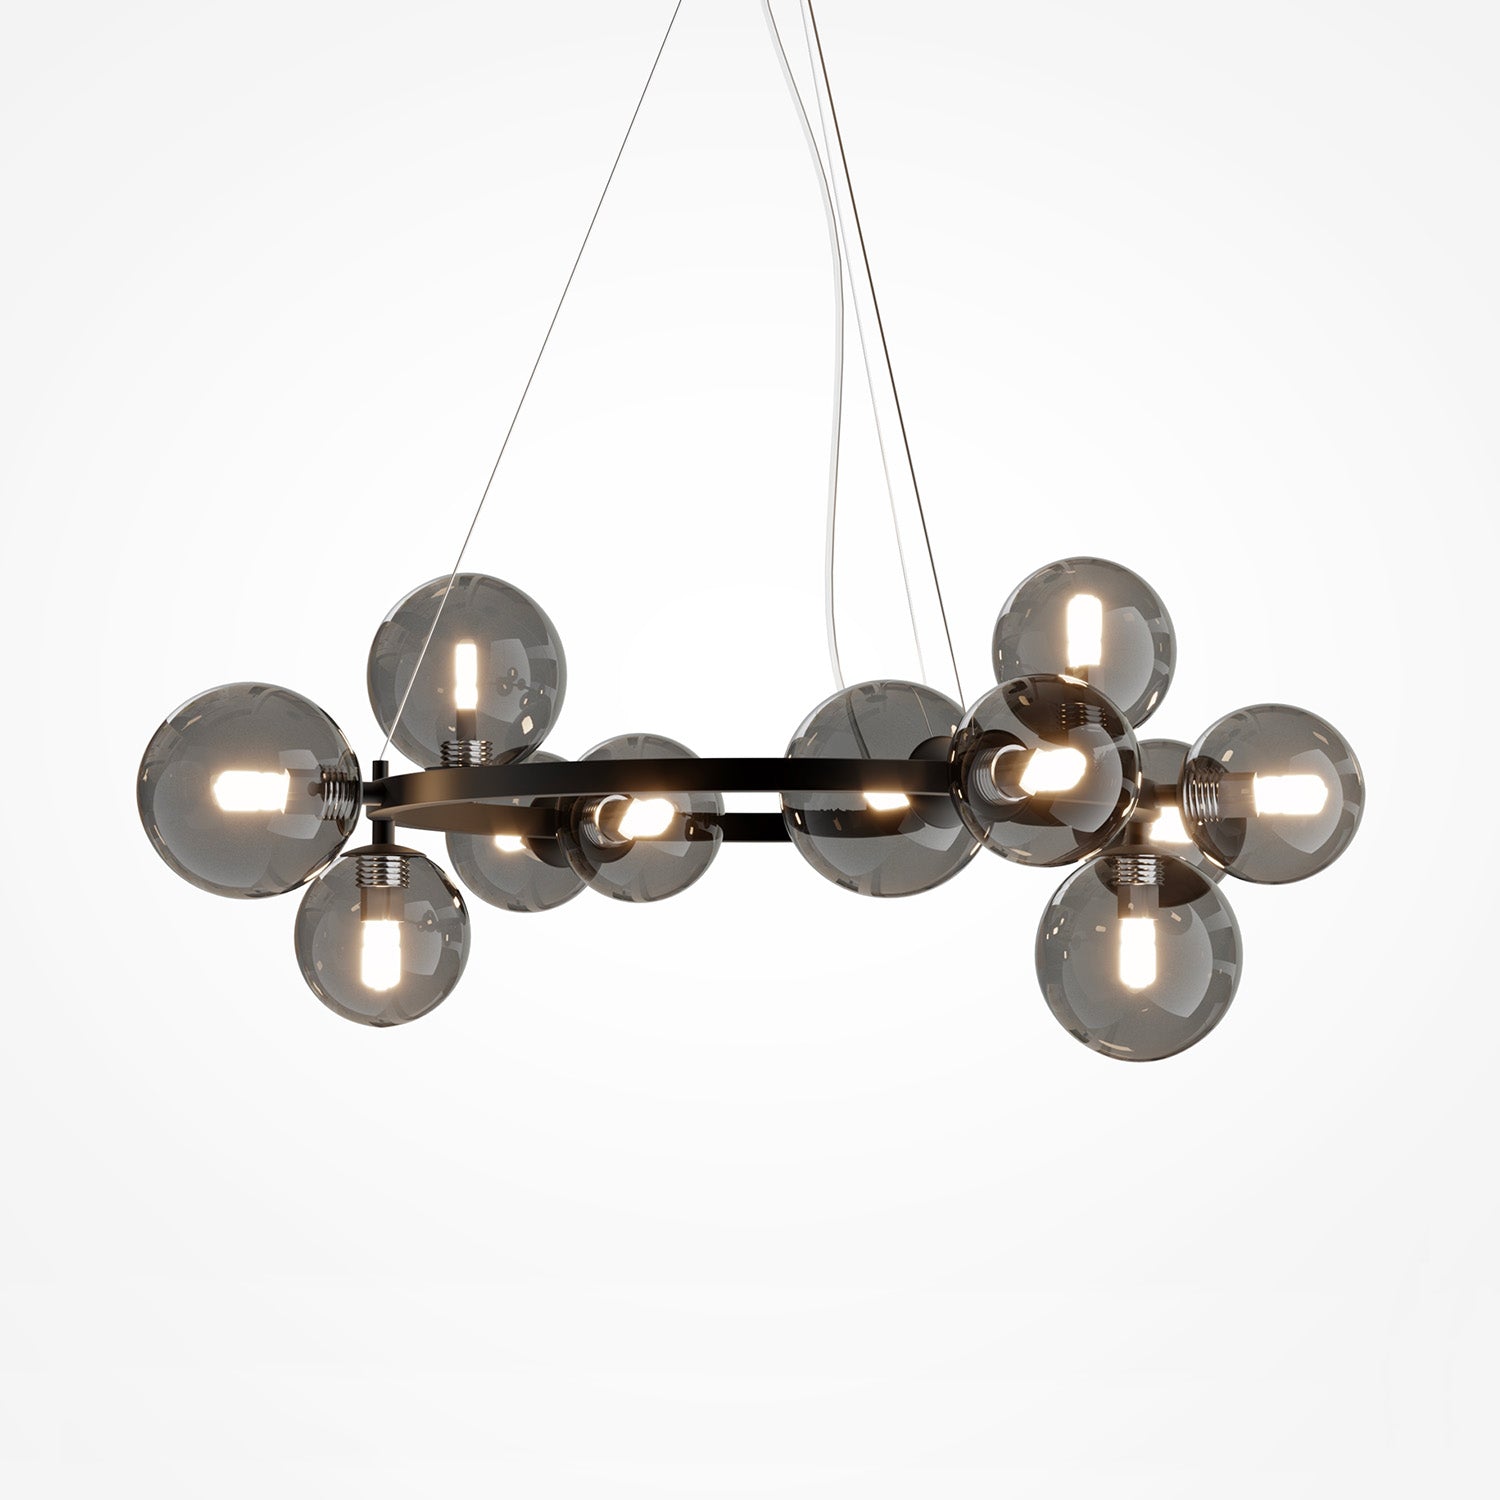 DALLAS E - Modern glass ball chandelier for bedrooms